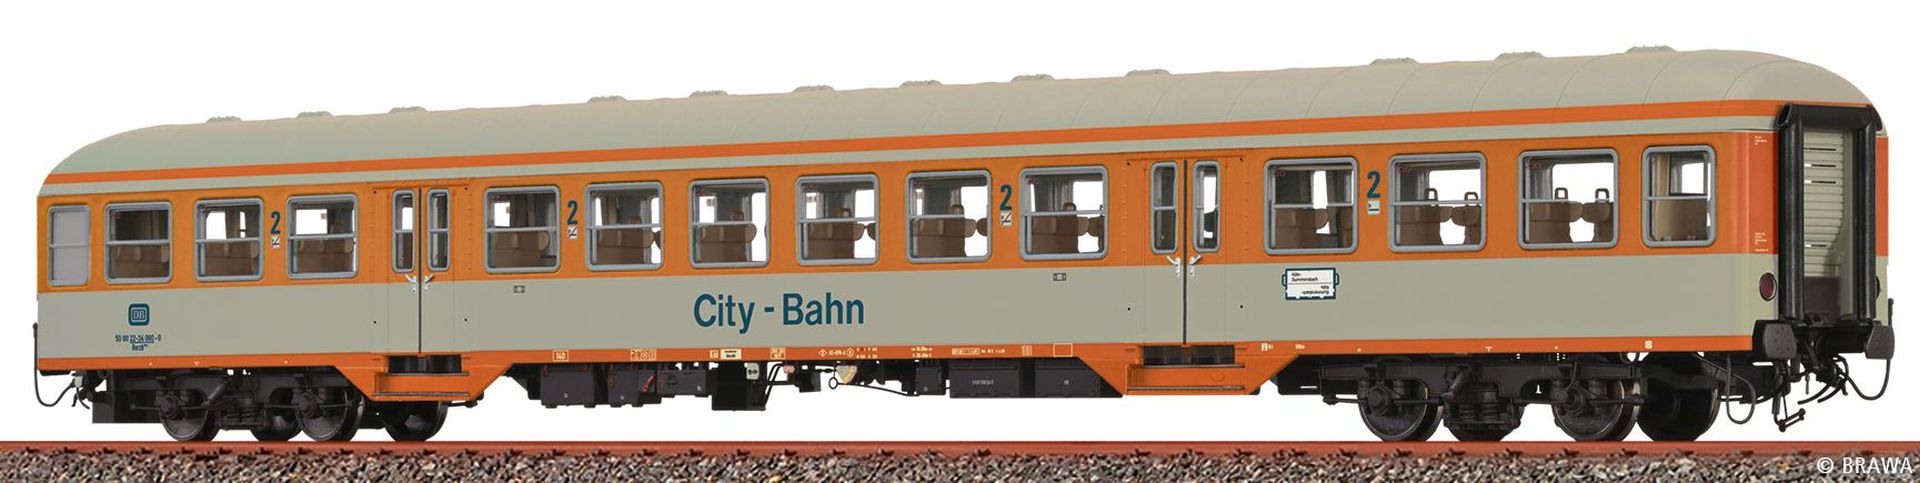 Brawa 46650 - Personenwagen Bnrzb 778.1 'City-Bahn', DB, Ep.IV, AC-LED-Innenbeleuchtung